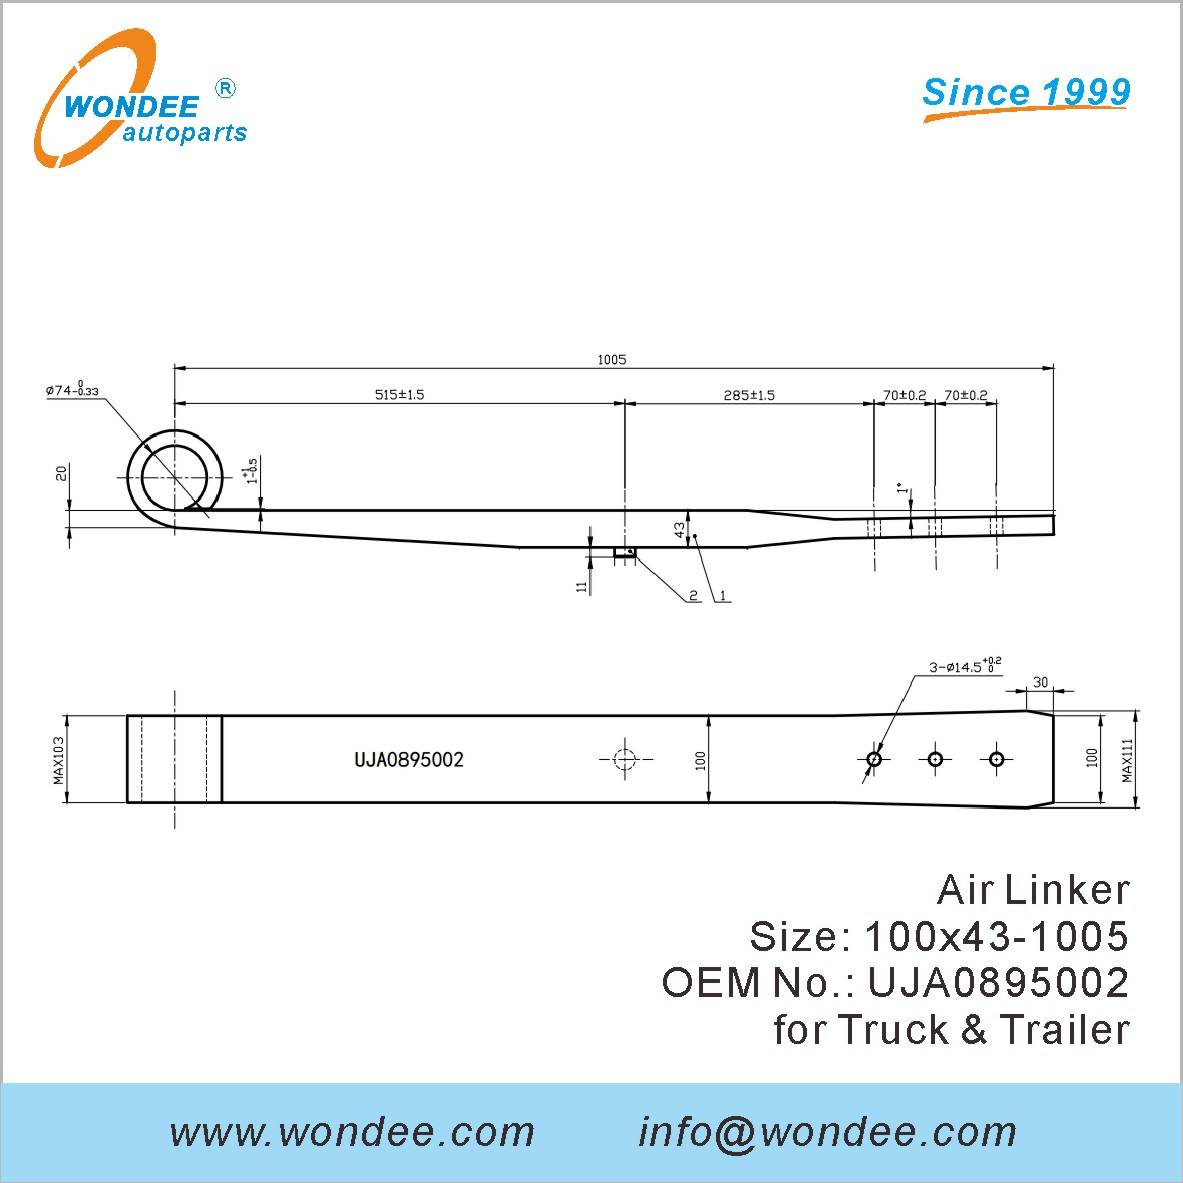 WONDEE Autoparts Air Linker OEM UJA0895002 for Truck & Trailer